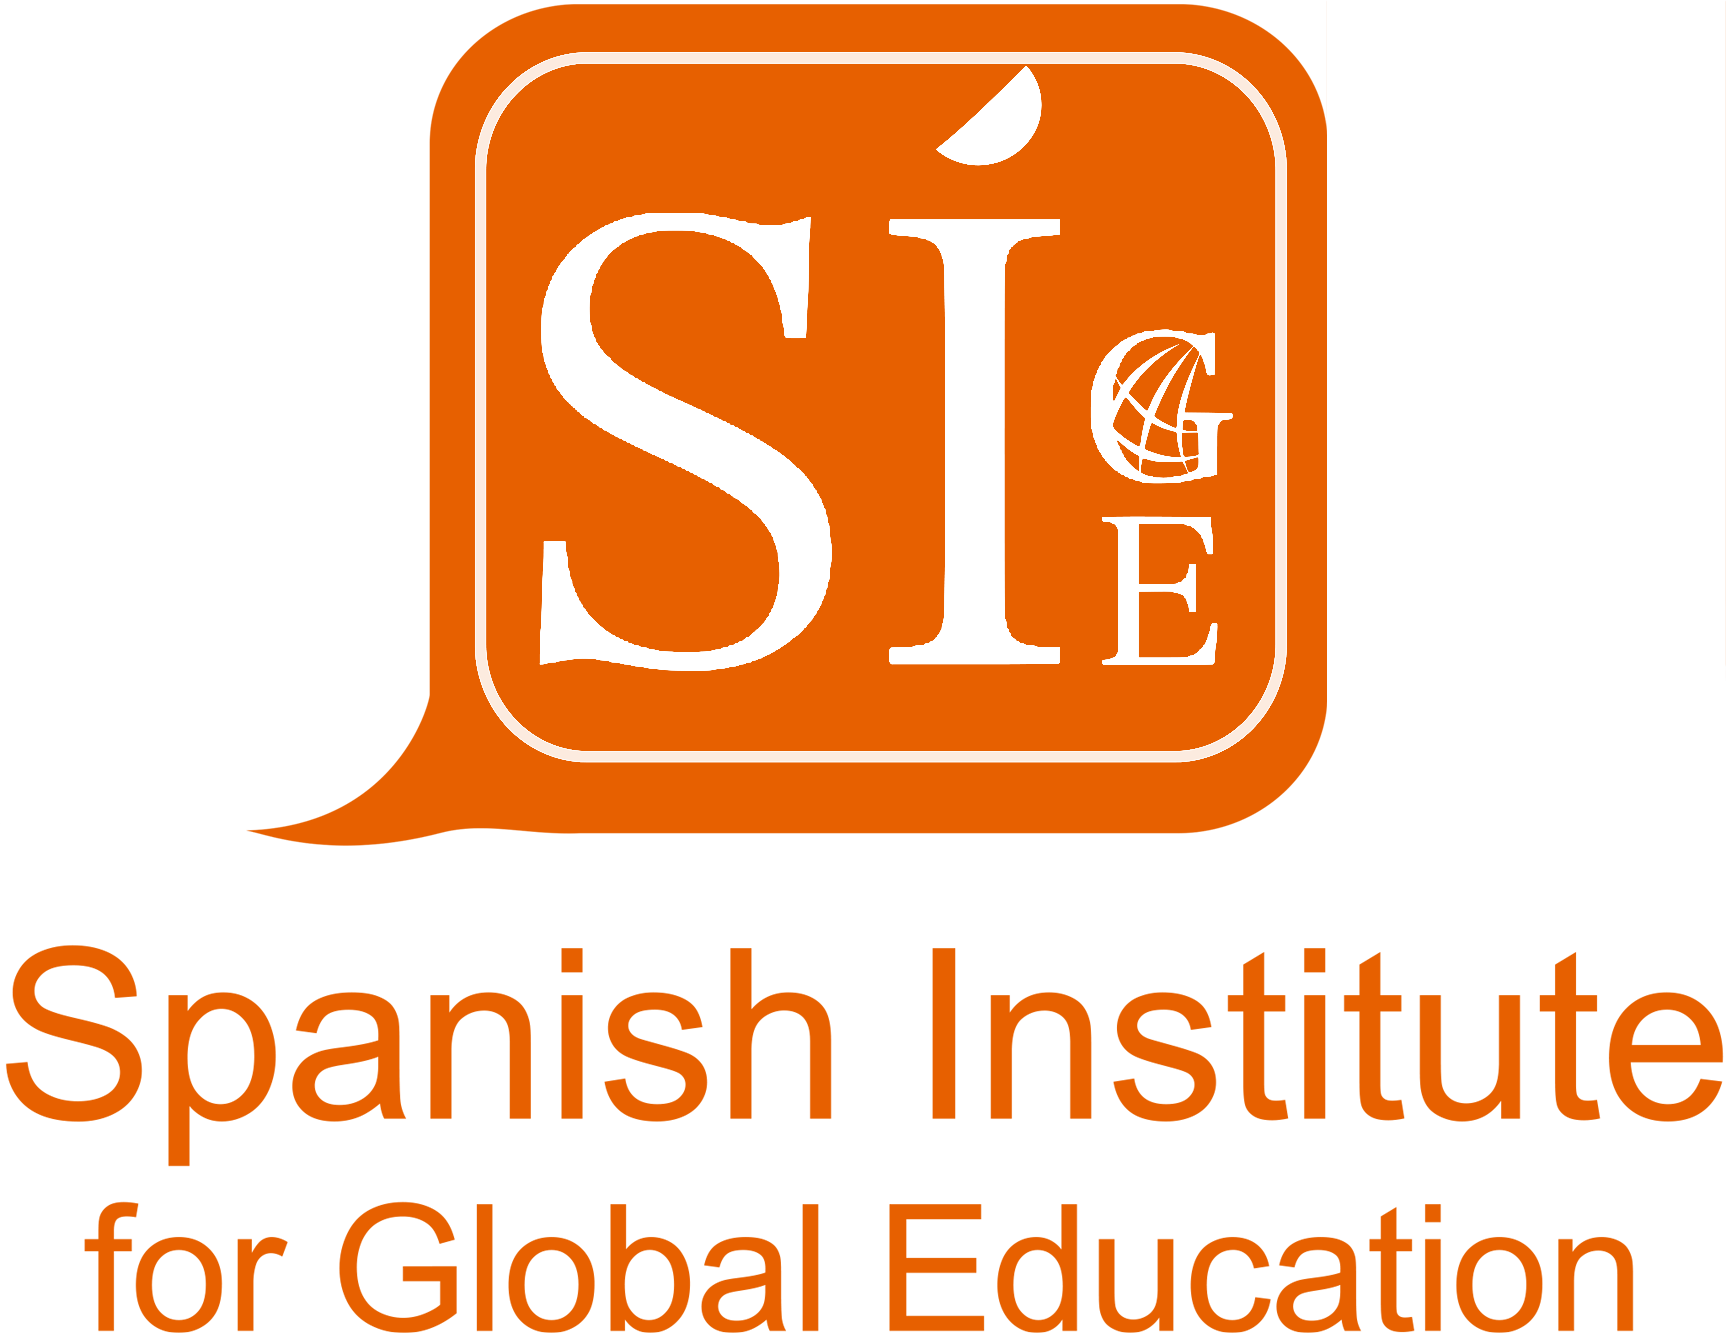 Spanish Institute for Global Education